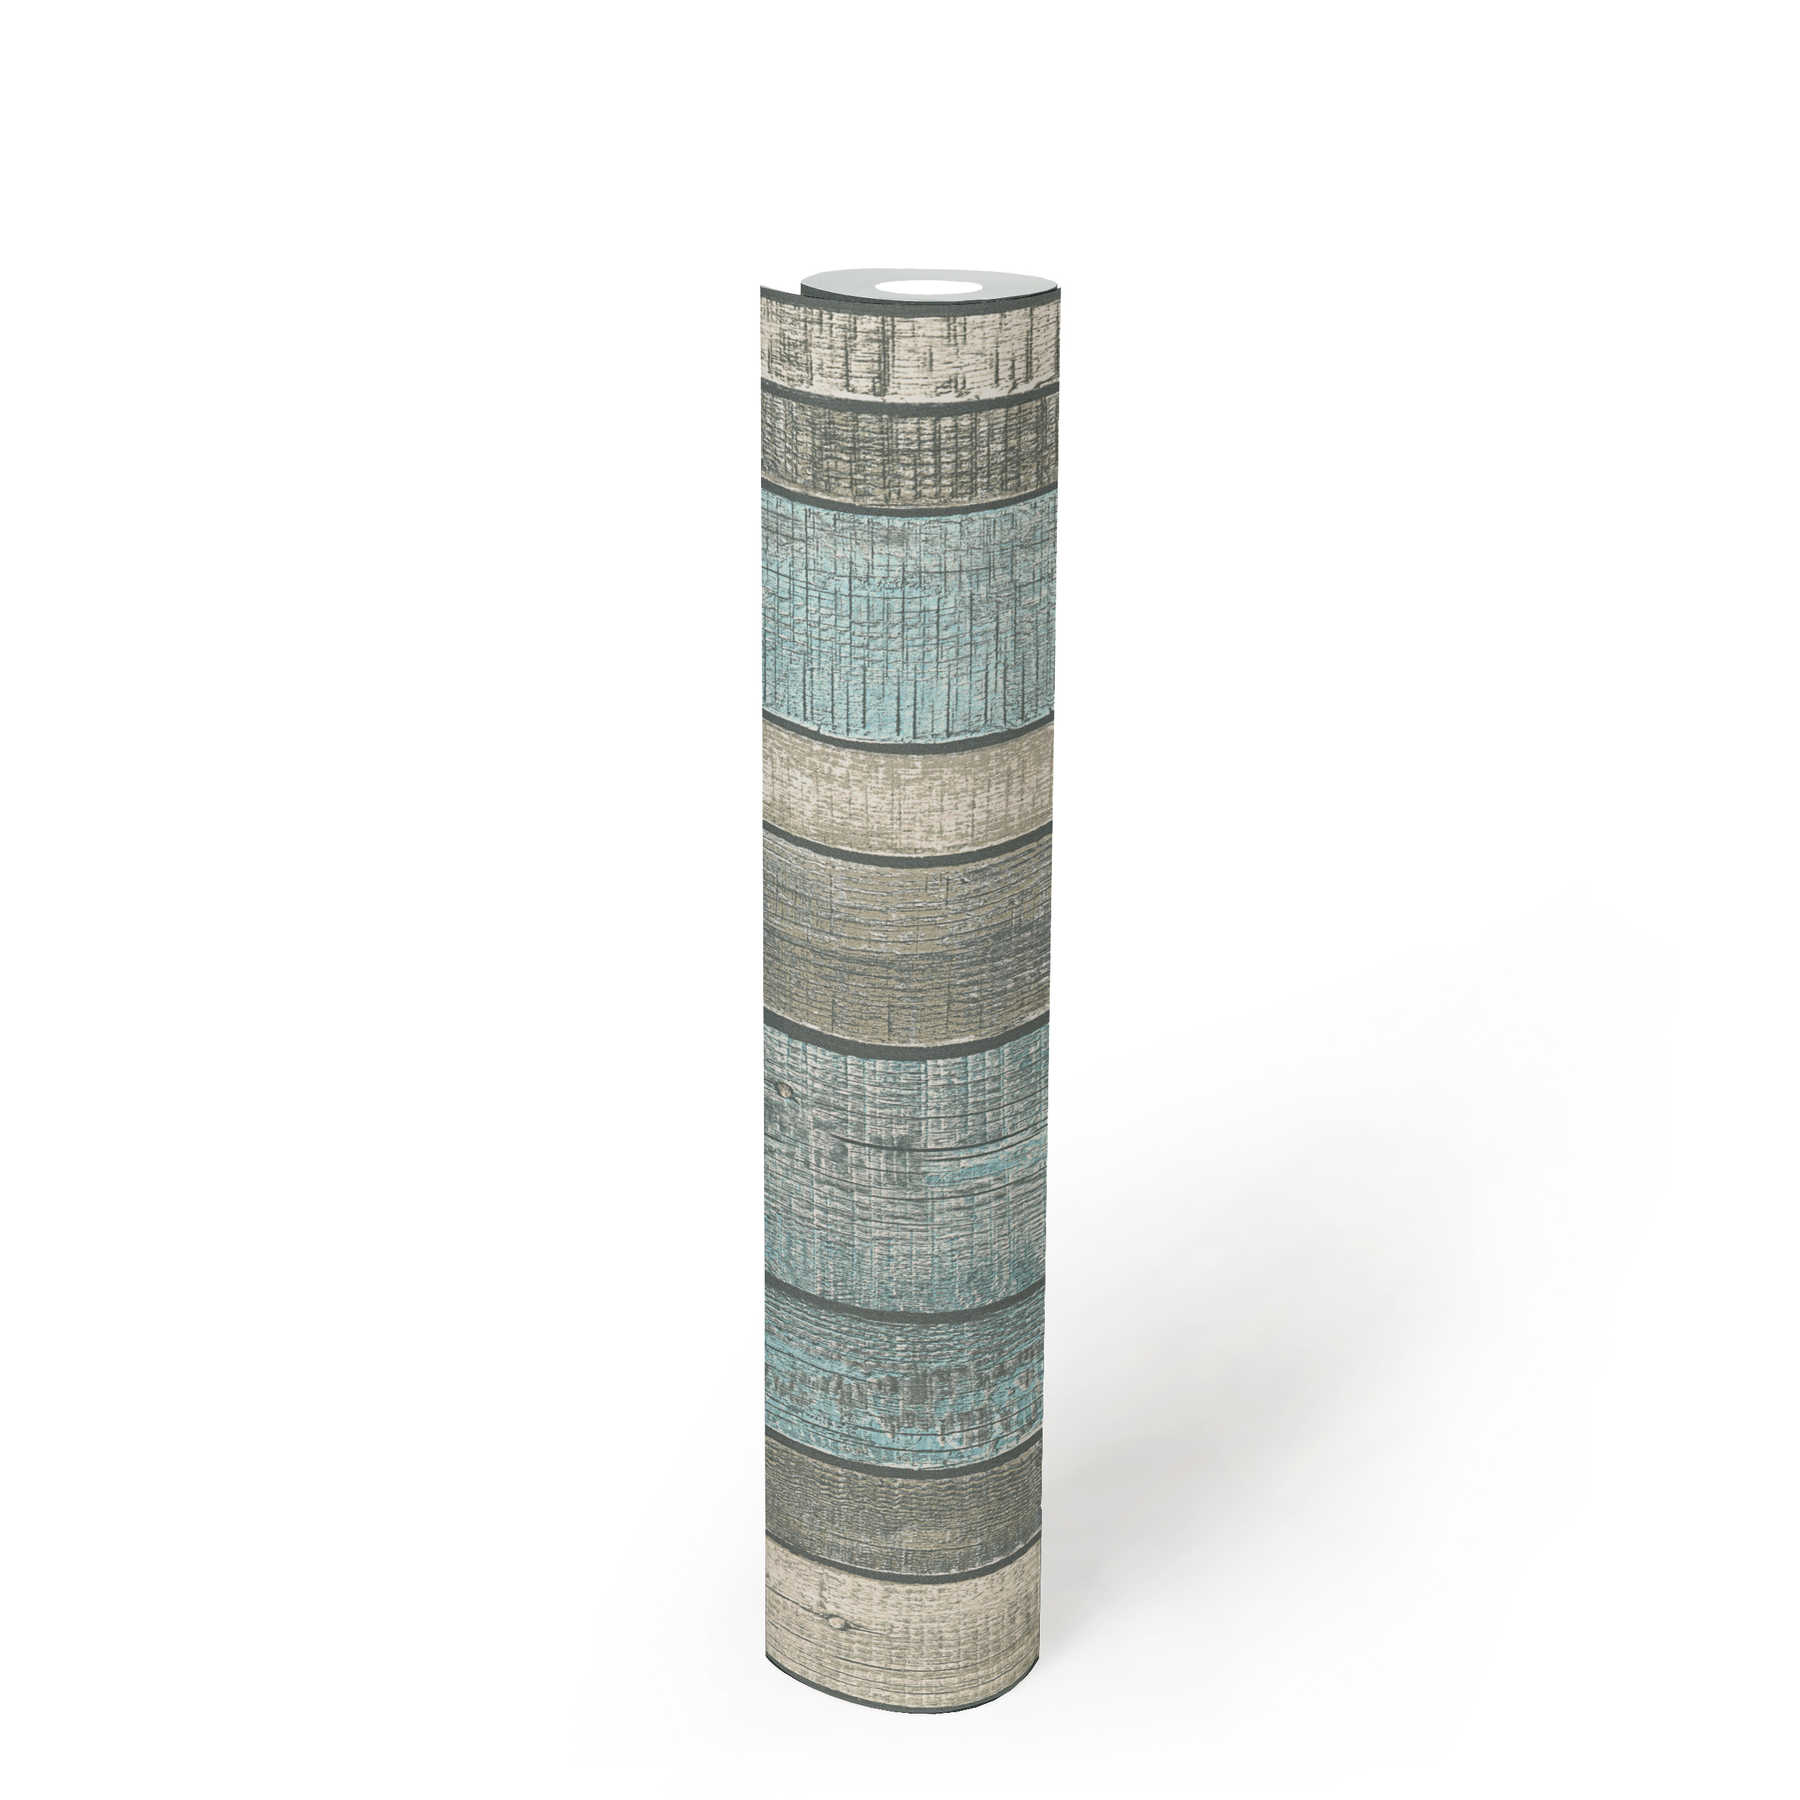             Holzoptik-Tapete mit Brettern & rustikaler Maserung – Blau, Grau, Creme
        